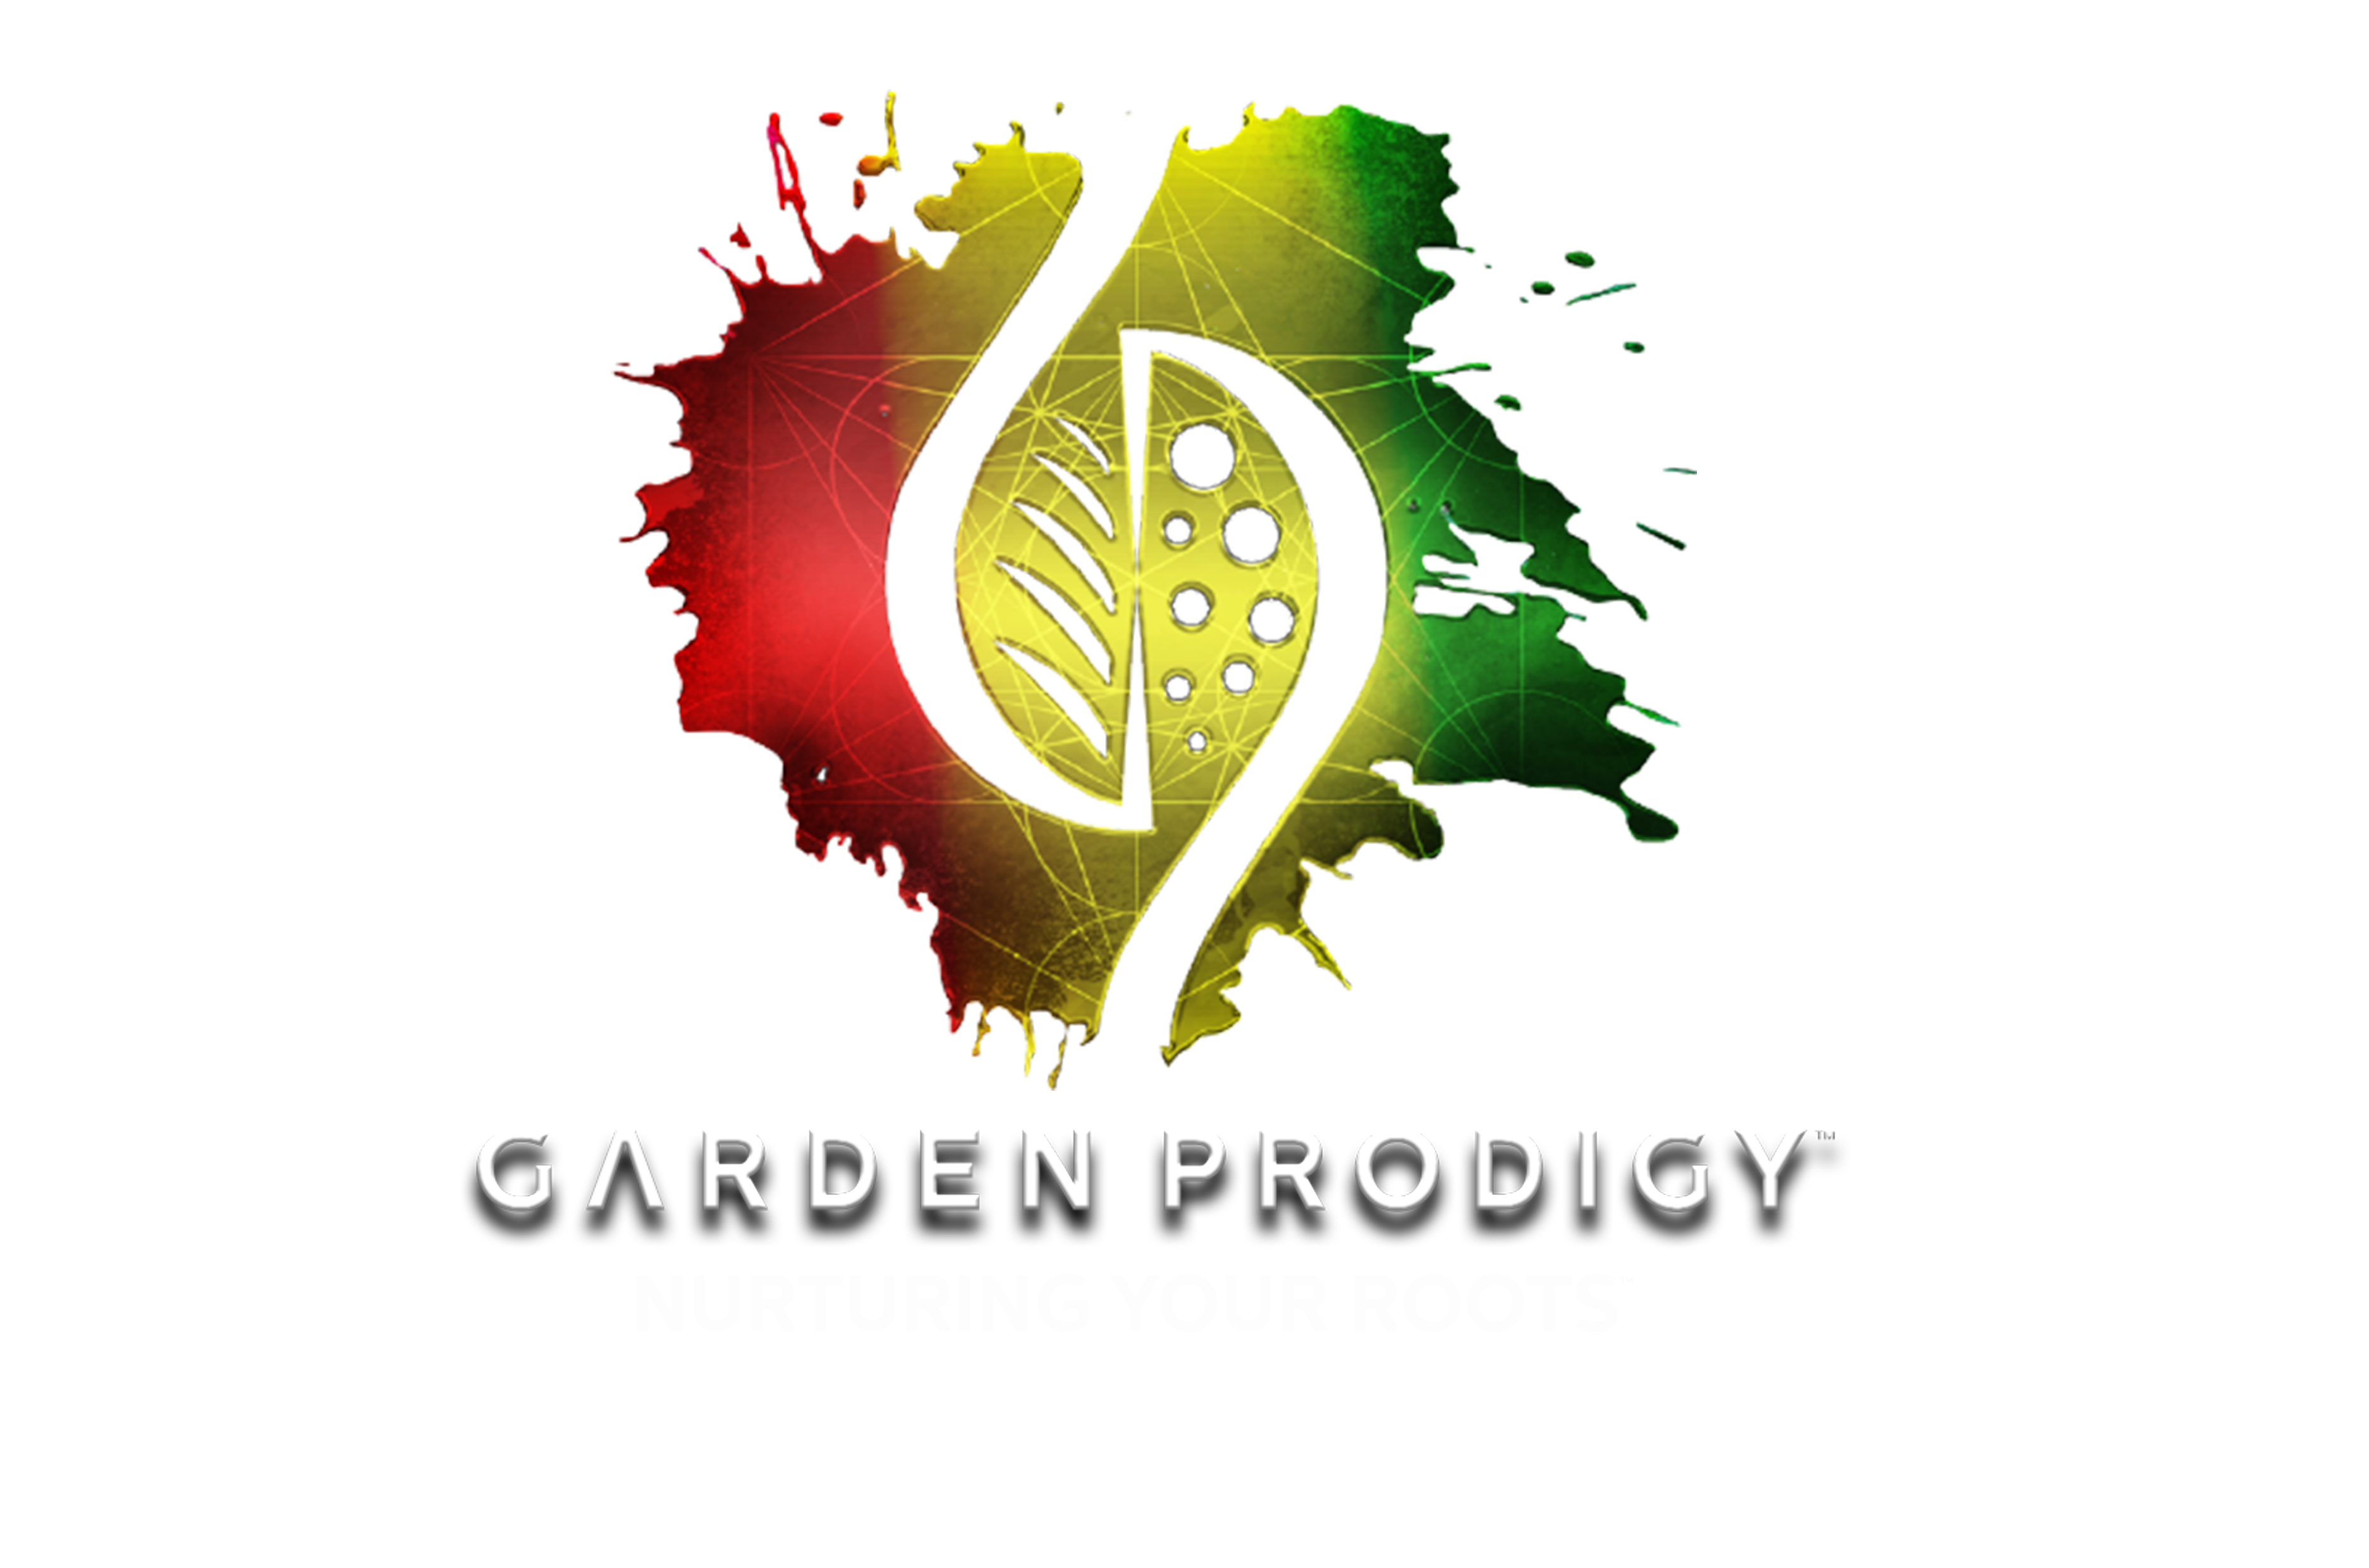 Garden Prodigy